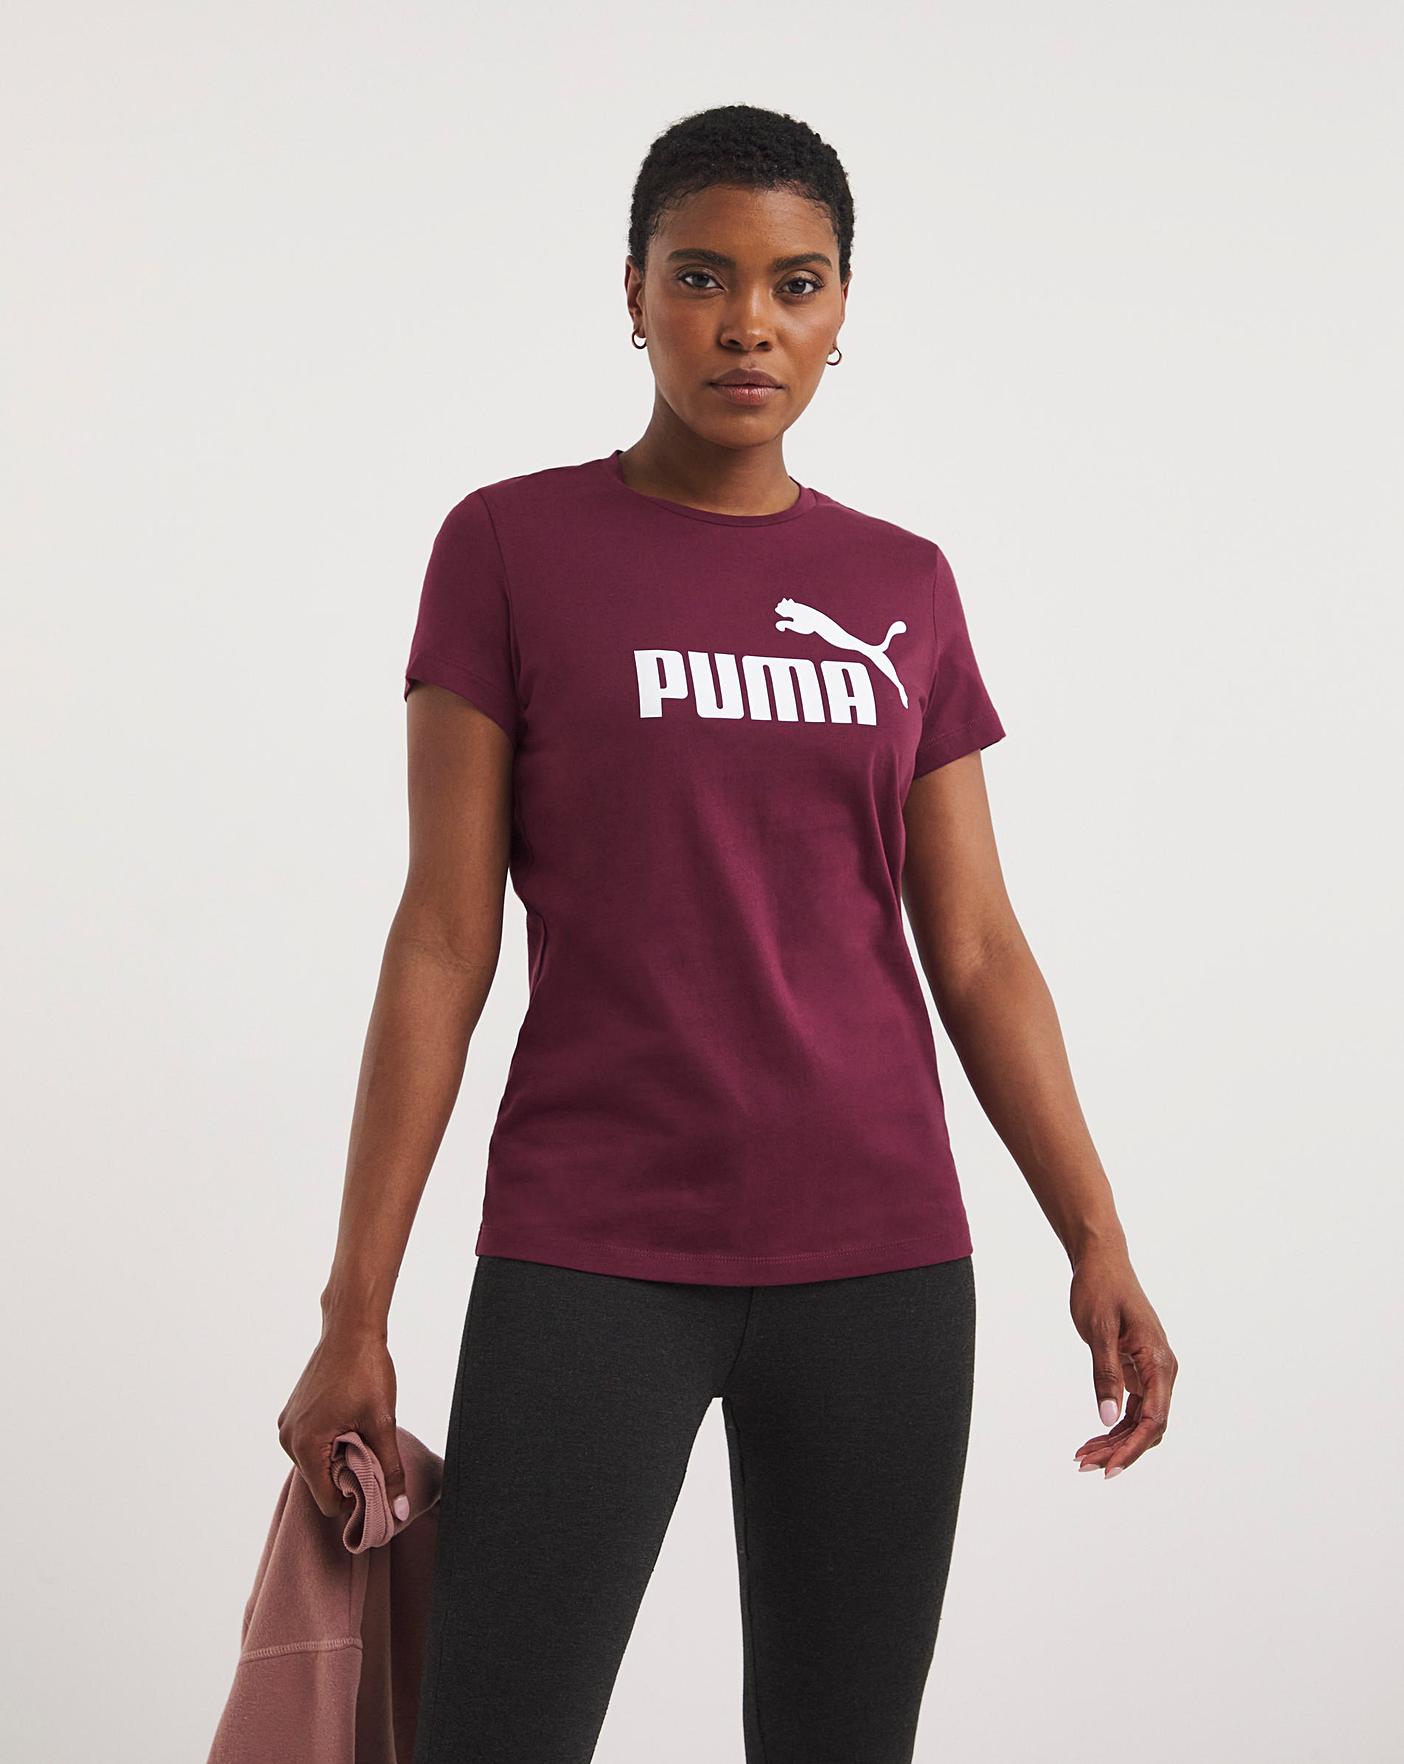 D T-Shirt Logo Essentials Williams | PUMA J